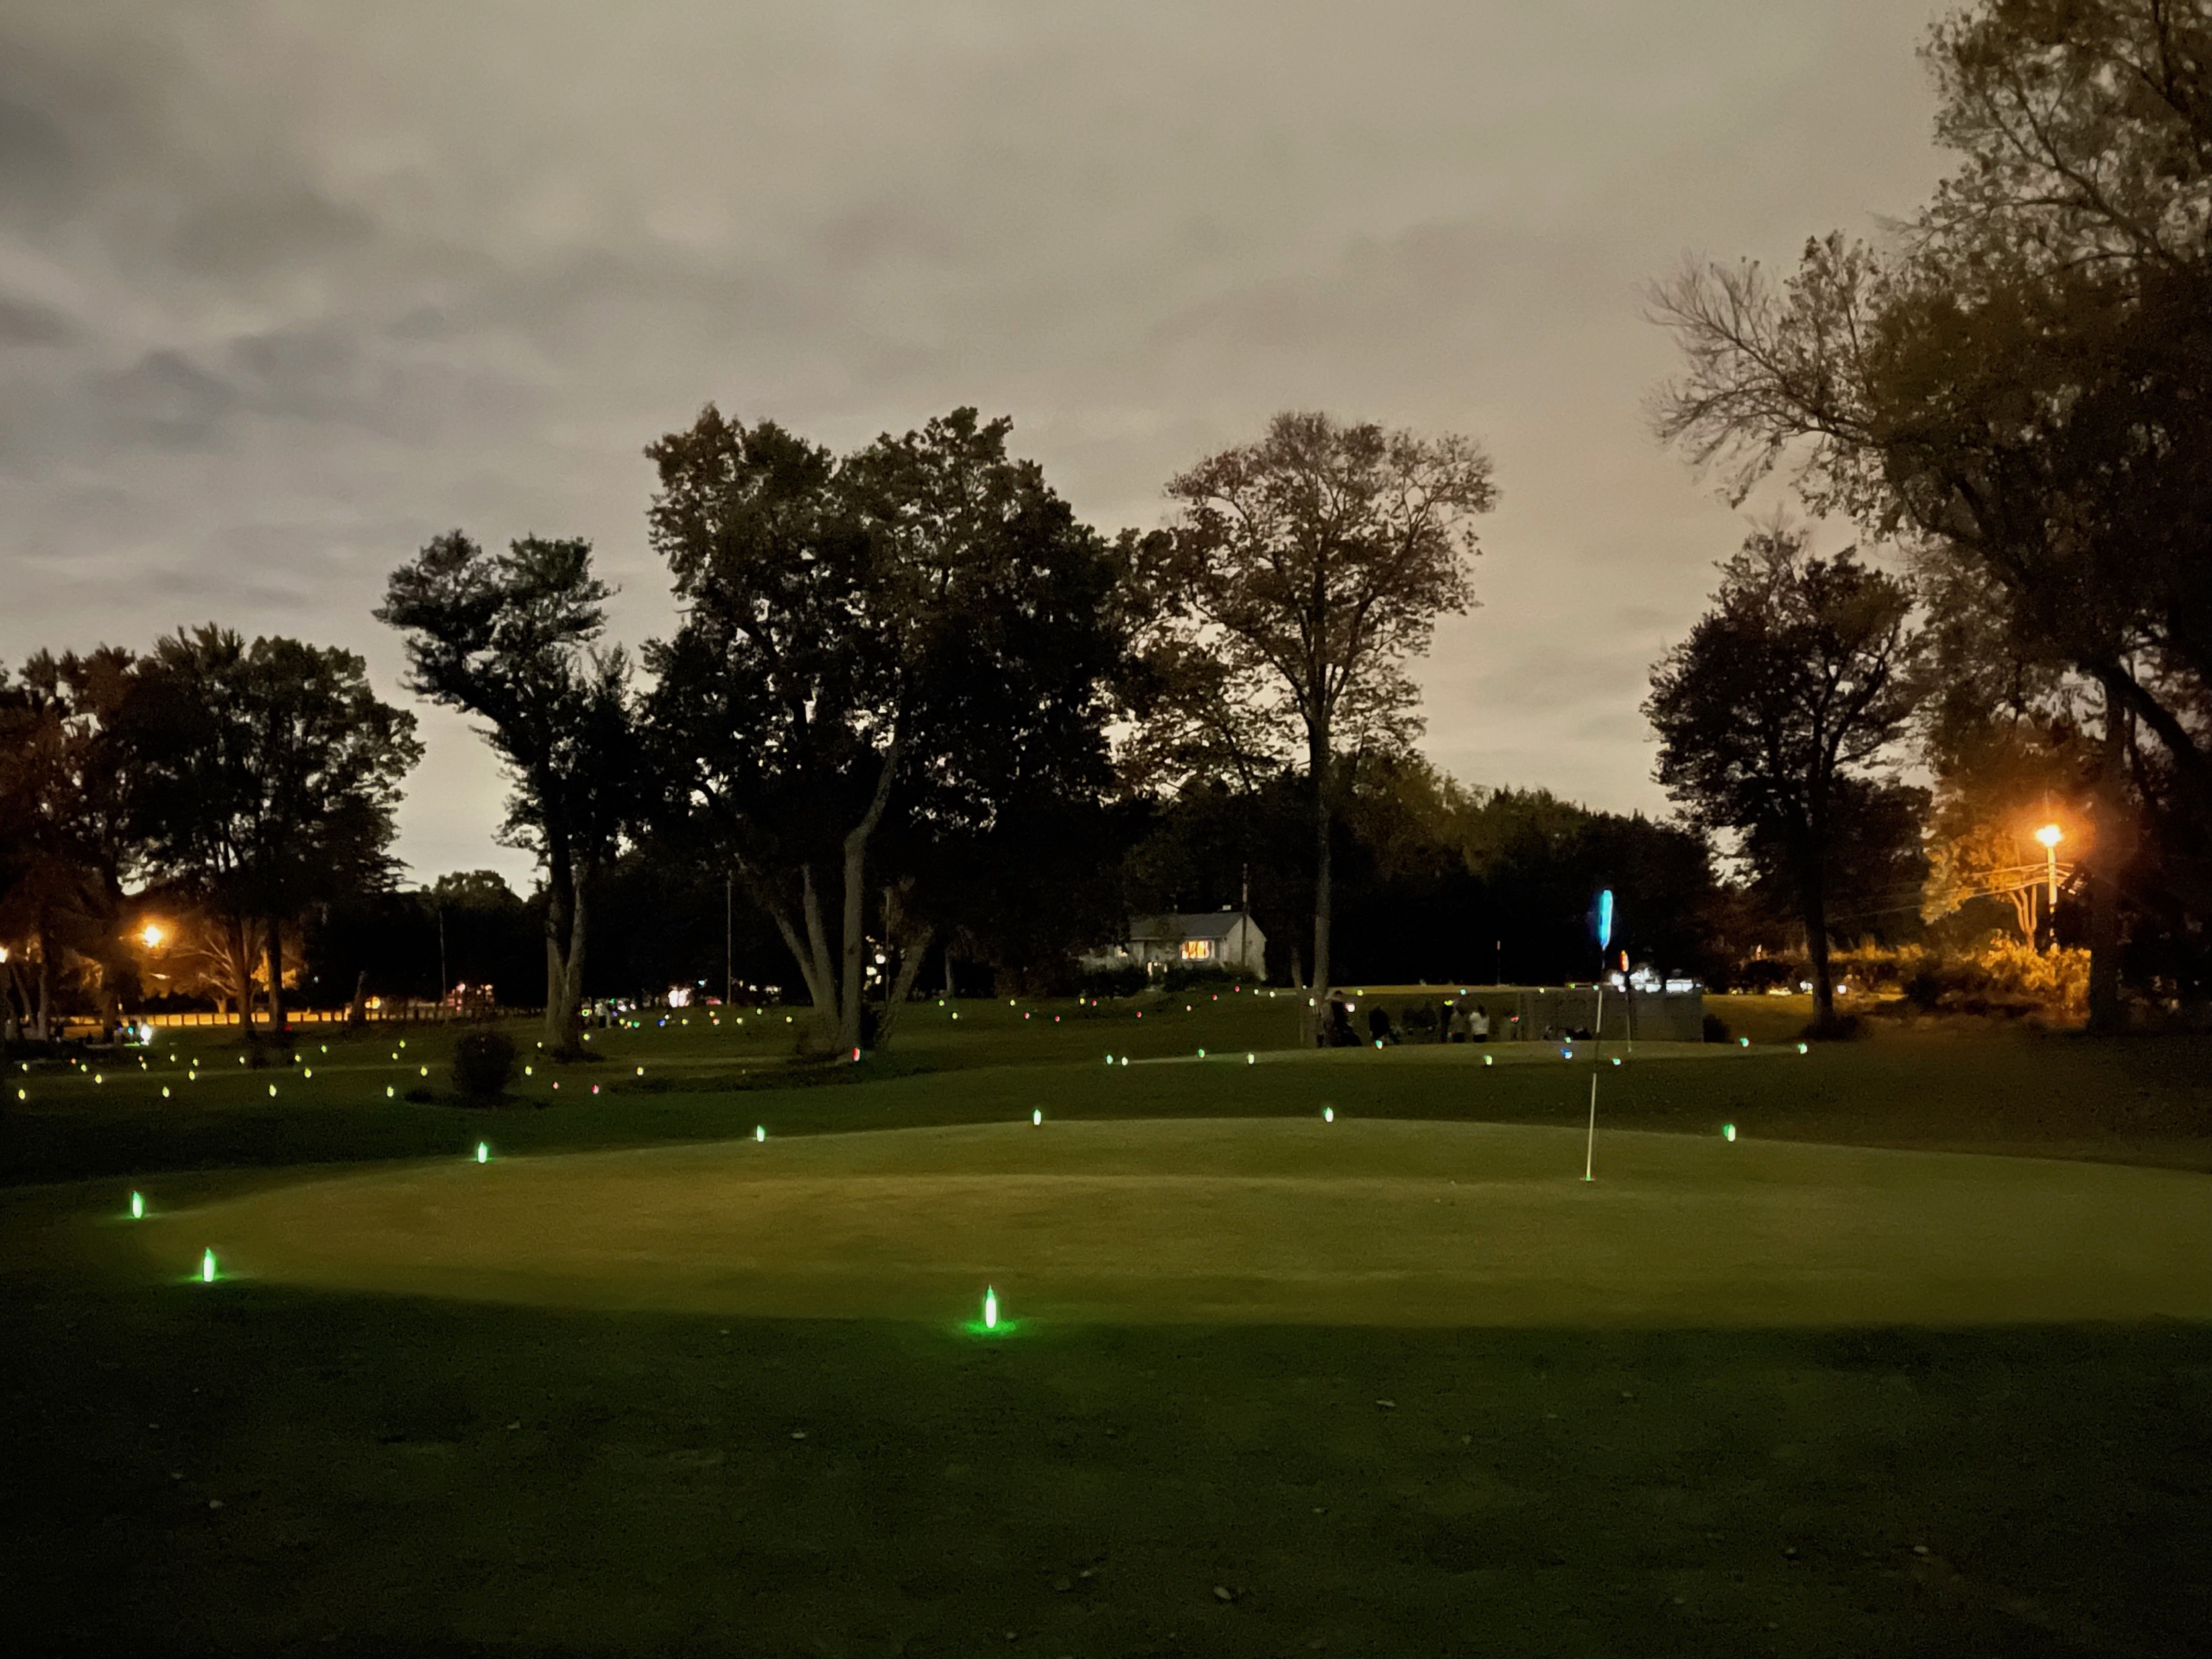 7th Annual “Shine a Light on ALS” Glow Golf Fundraiser